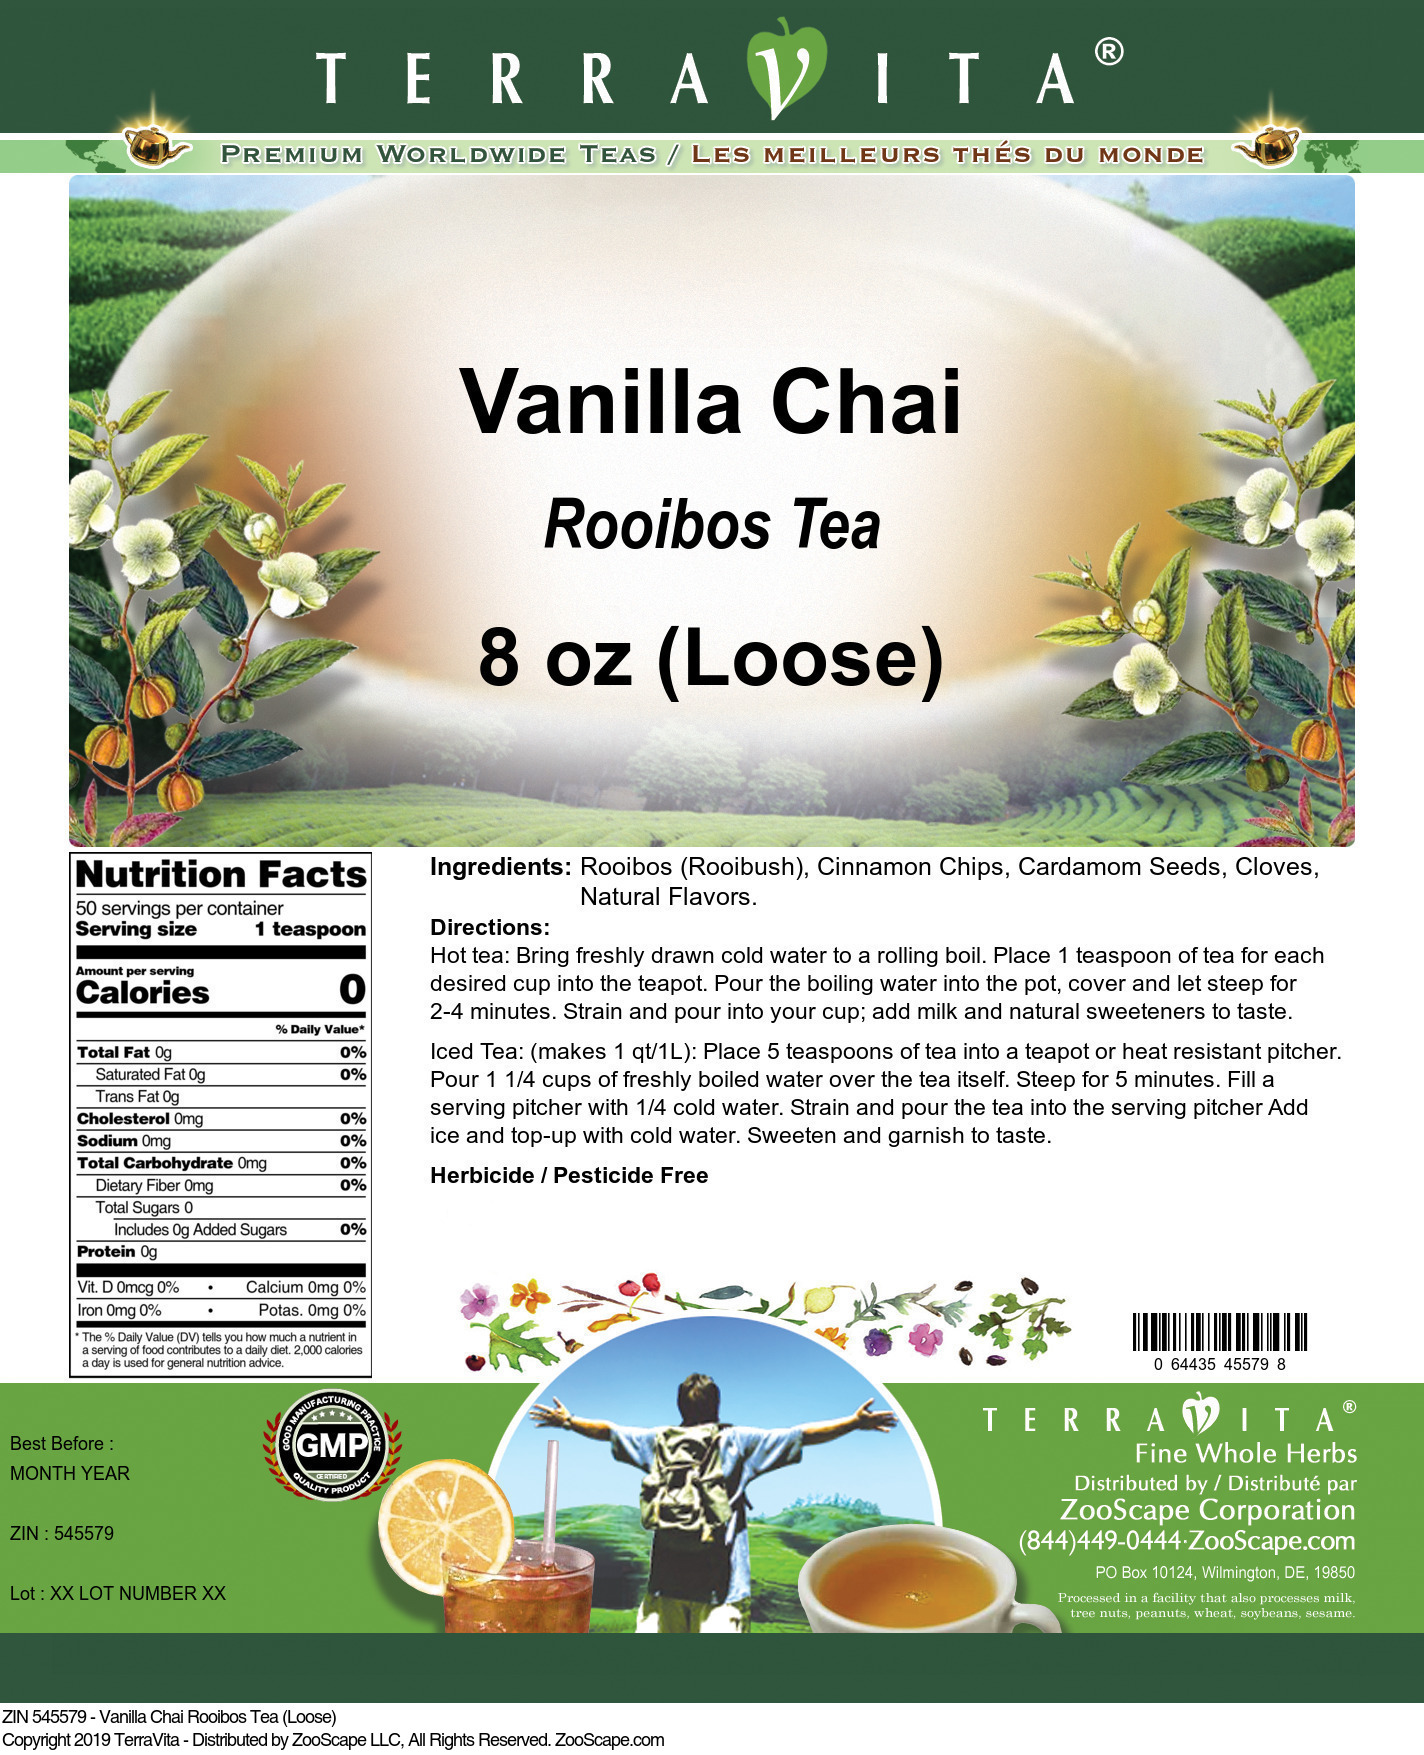 Vanilla Chai Rooibos Tea (Loose) - Label